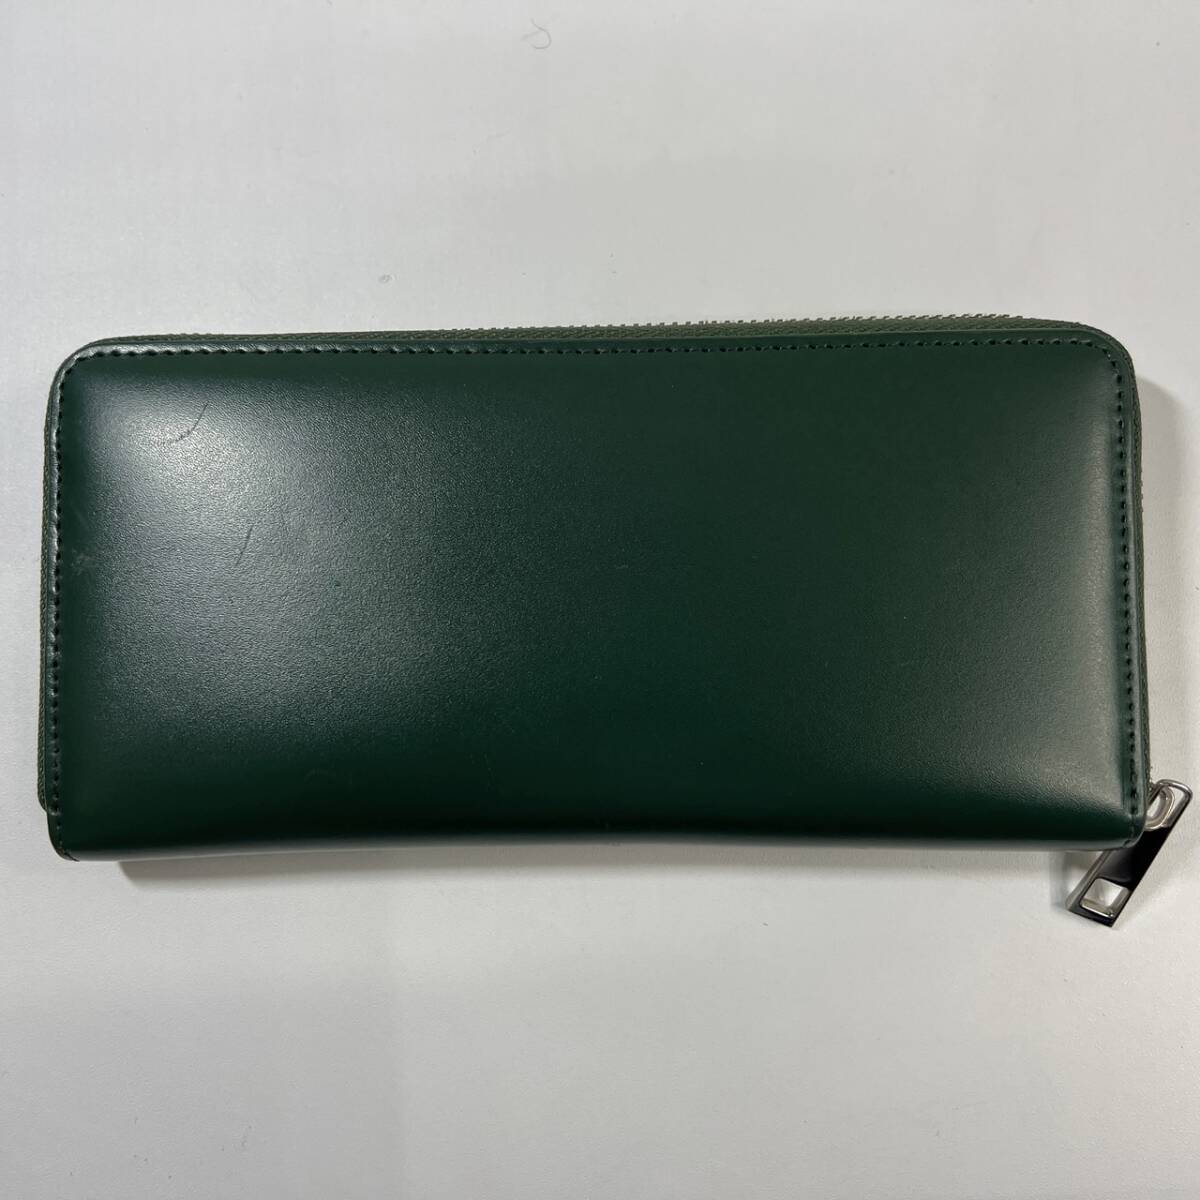  blur MURA round fastener long wallet green × Brown original leather wallet preservation box 